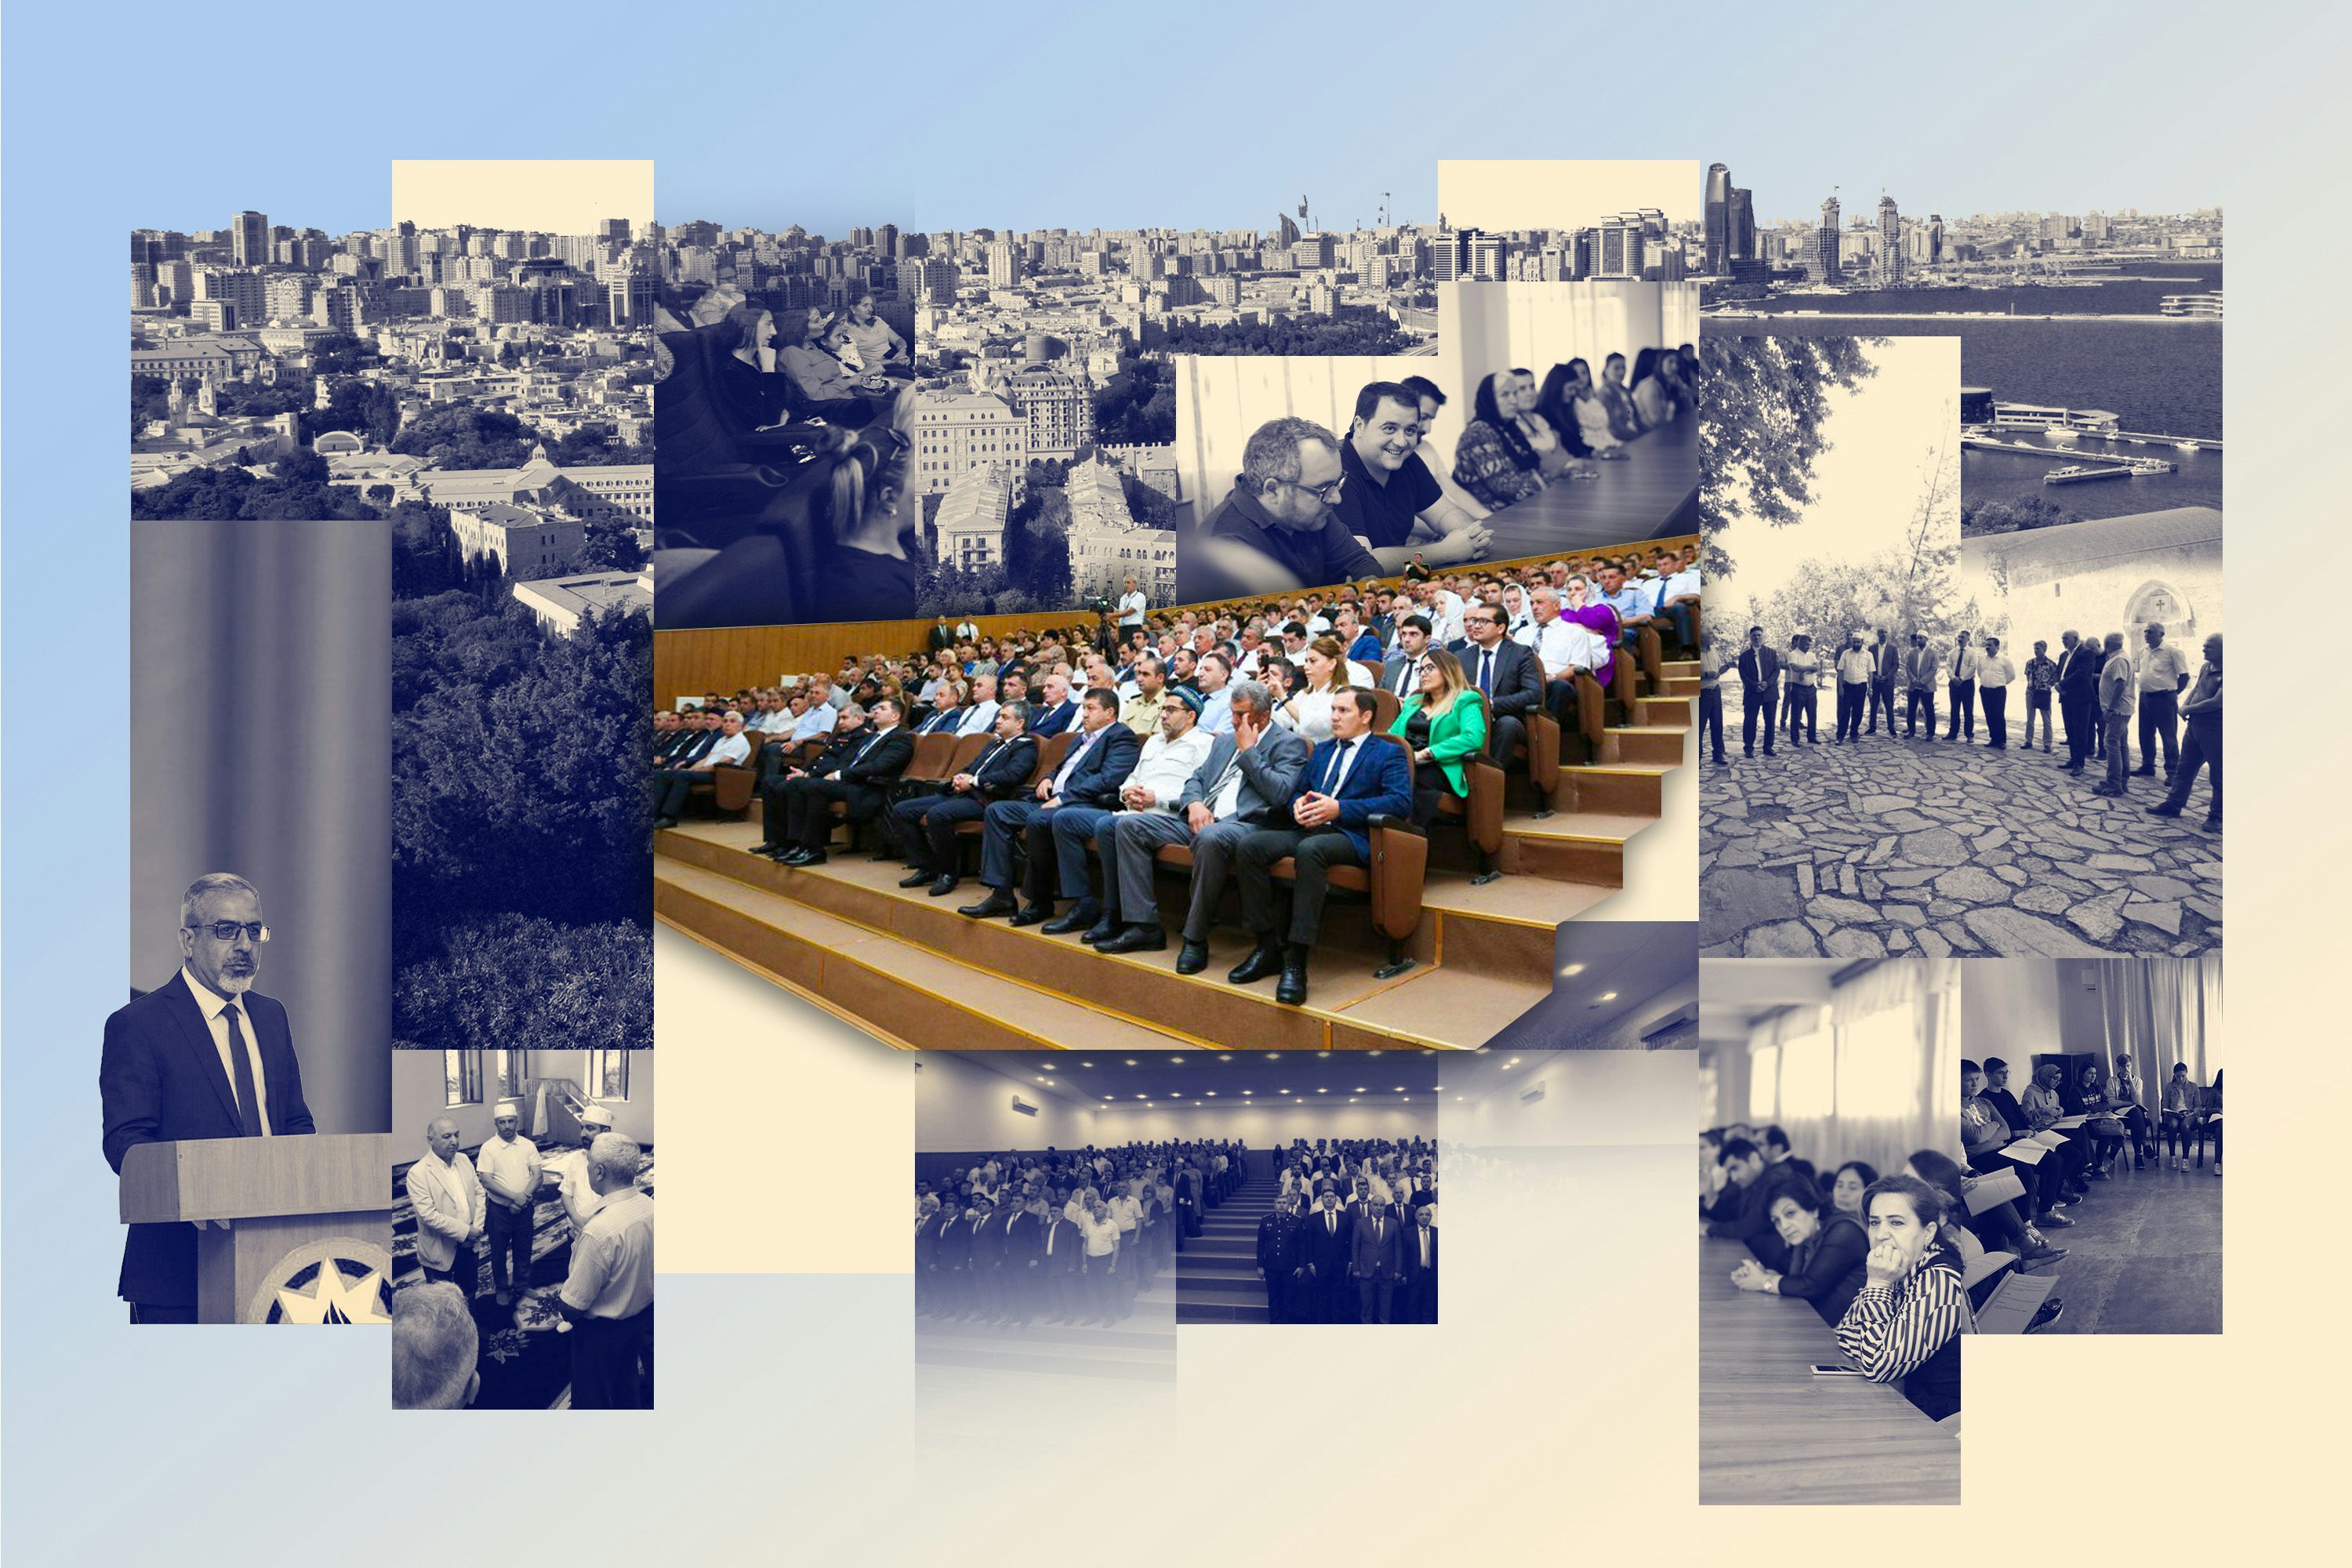 Azerbaijan: Bahá’í principle of unity inspires national conference on coexistence